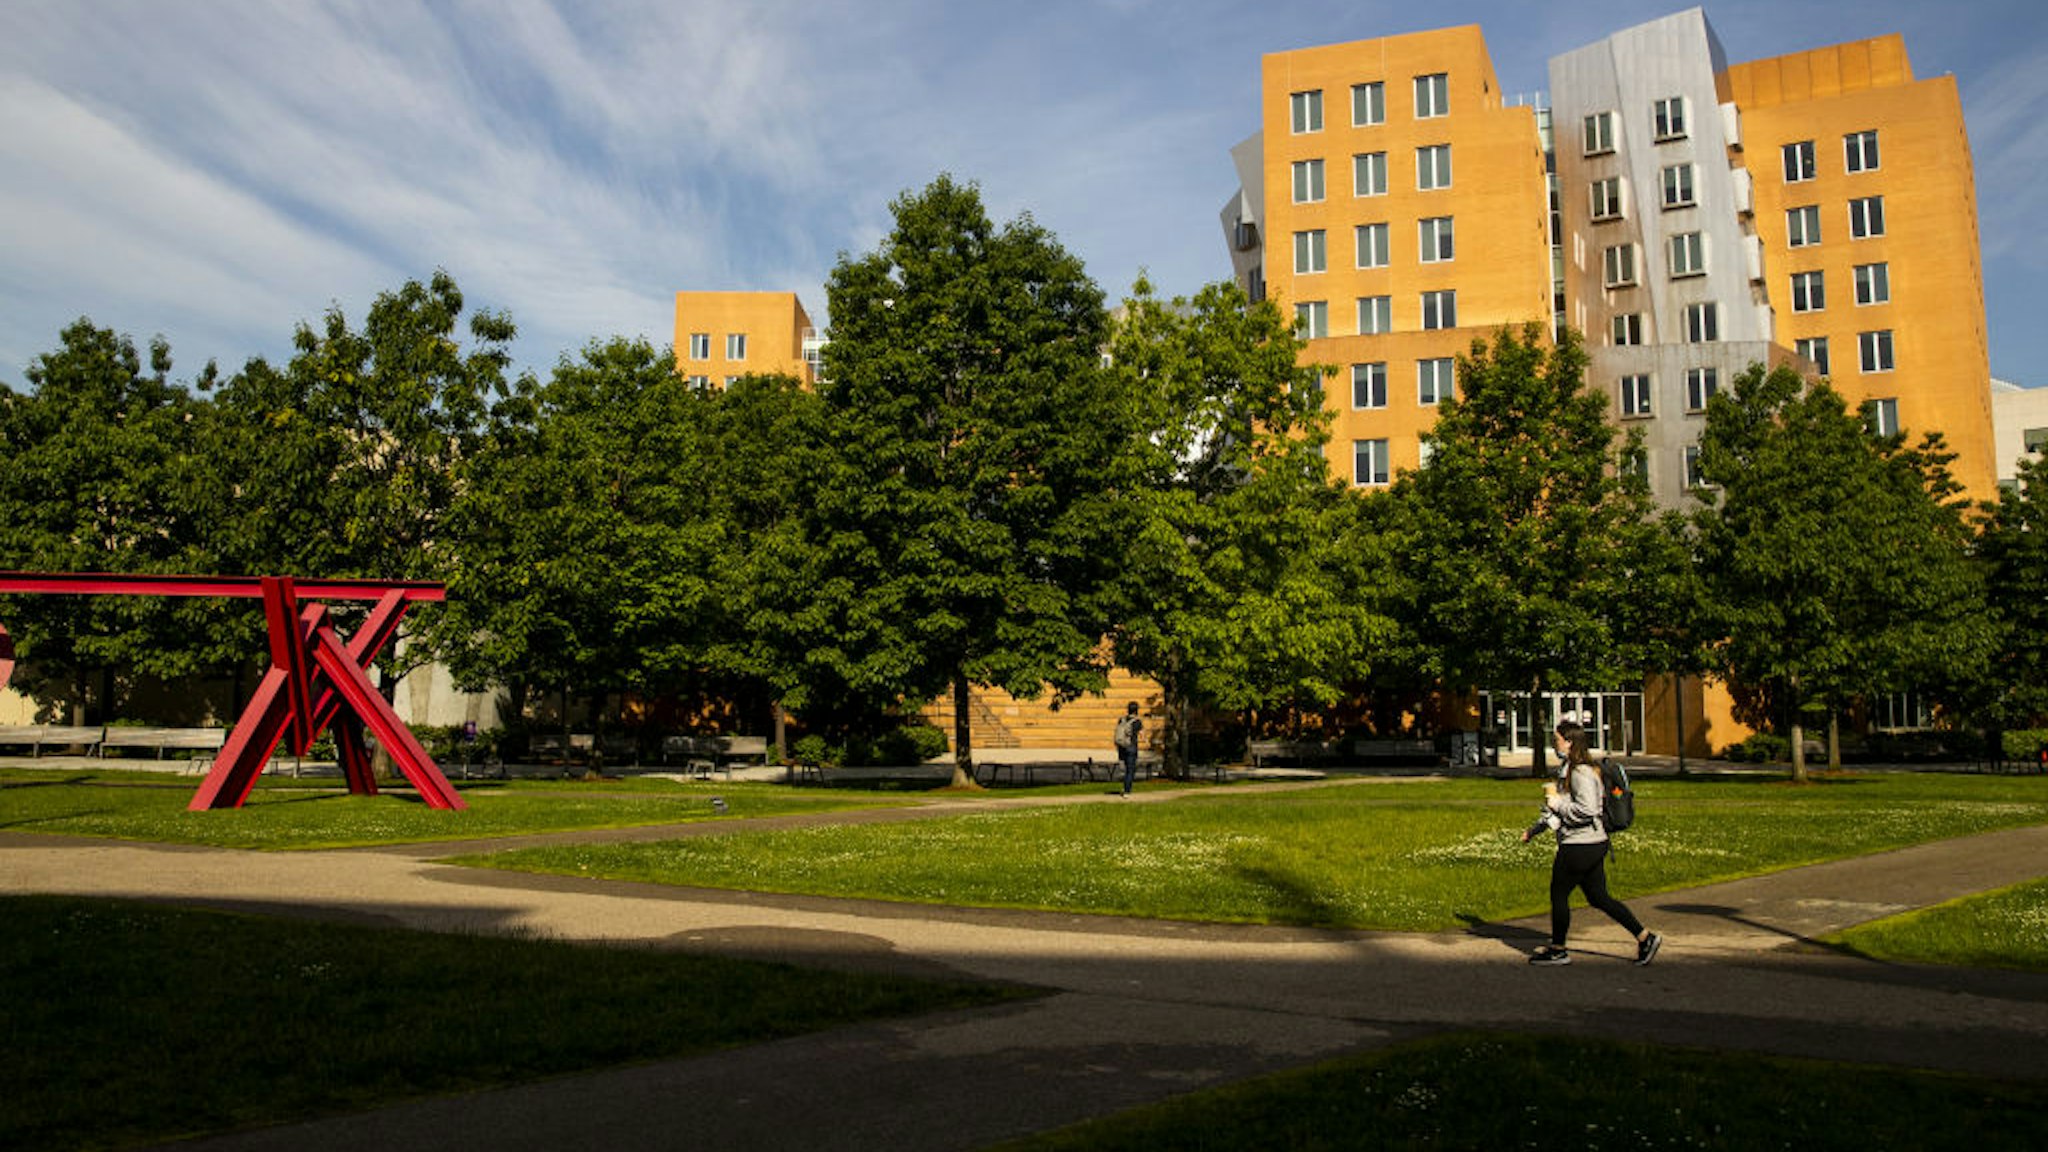 A student walks through Hockfield Court at the Massachusetts Institute of Technology (MIT) campus in Cambridge, Massachusetts, U.S., on Wednesday, June 2, 2021.